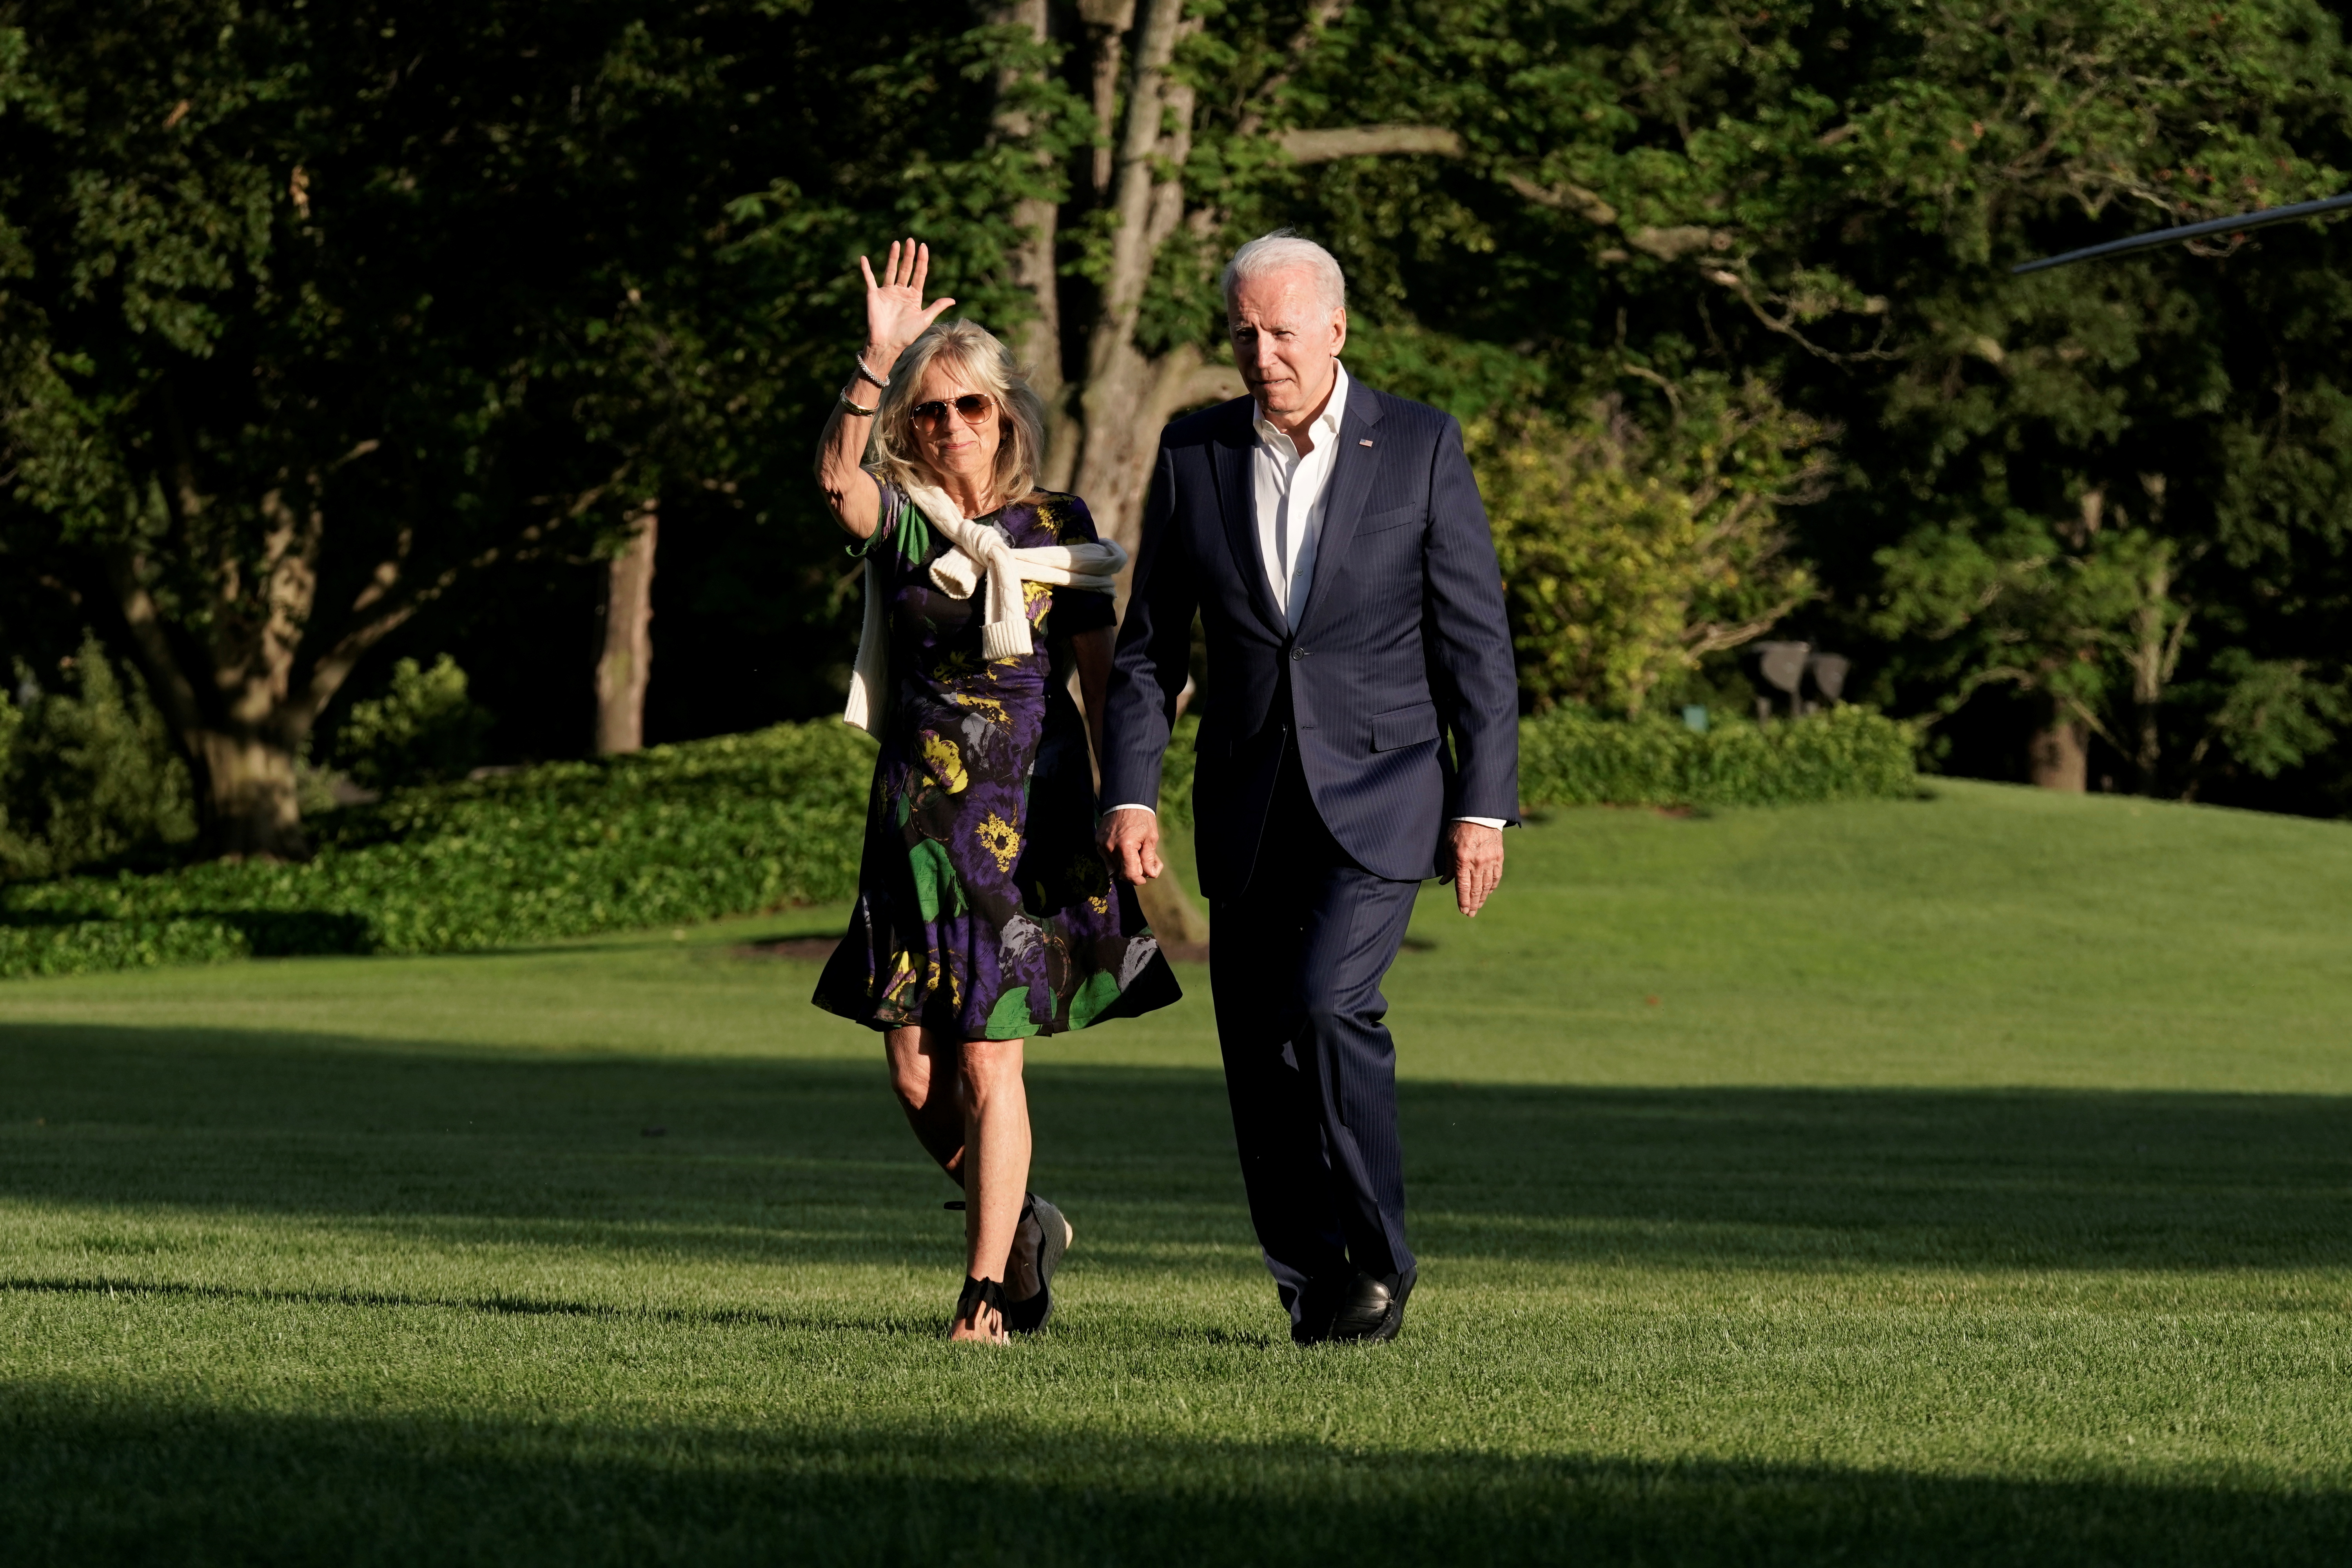 U.S. President Joe Biden and First Lady Jill Biden arrive at the White House